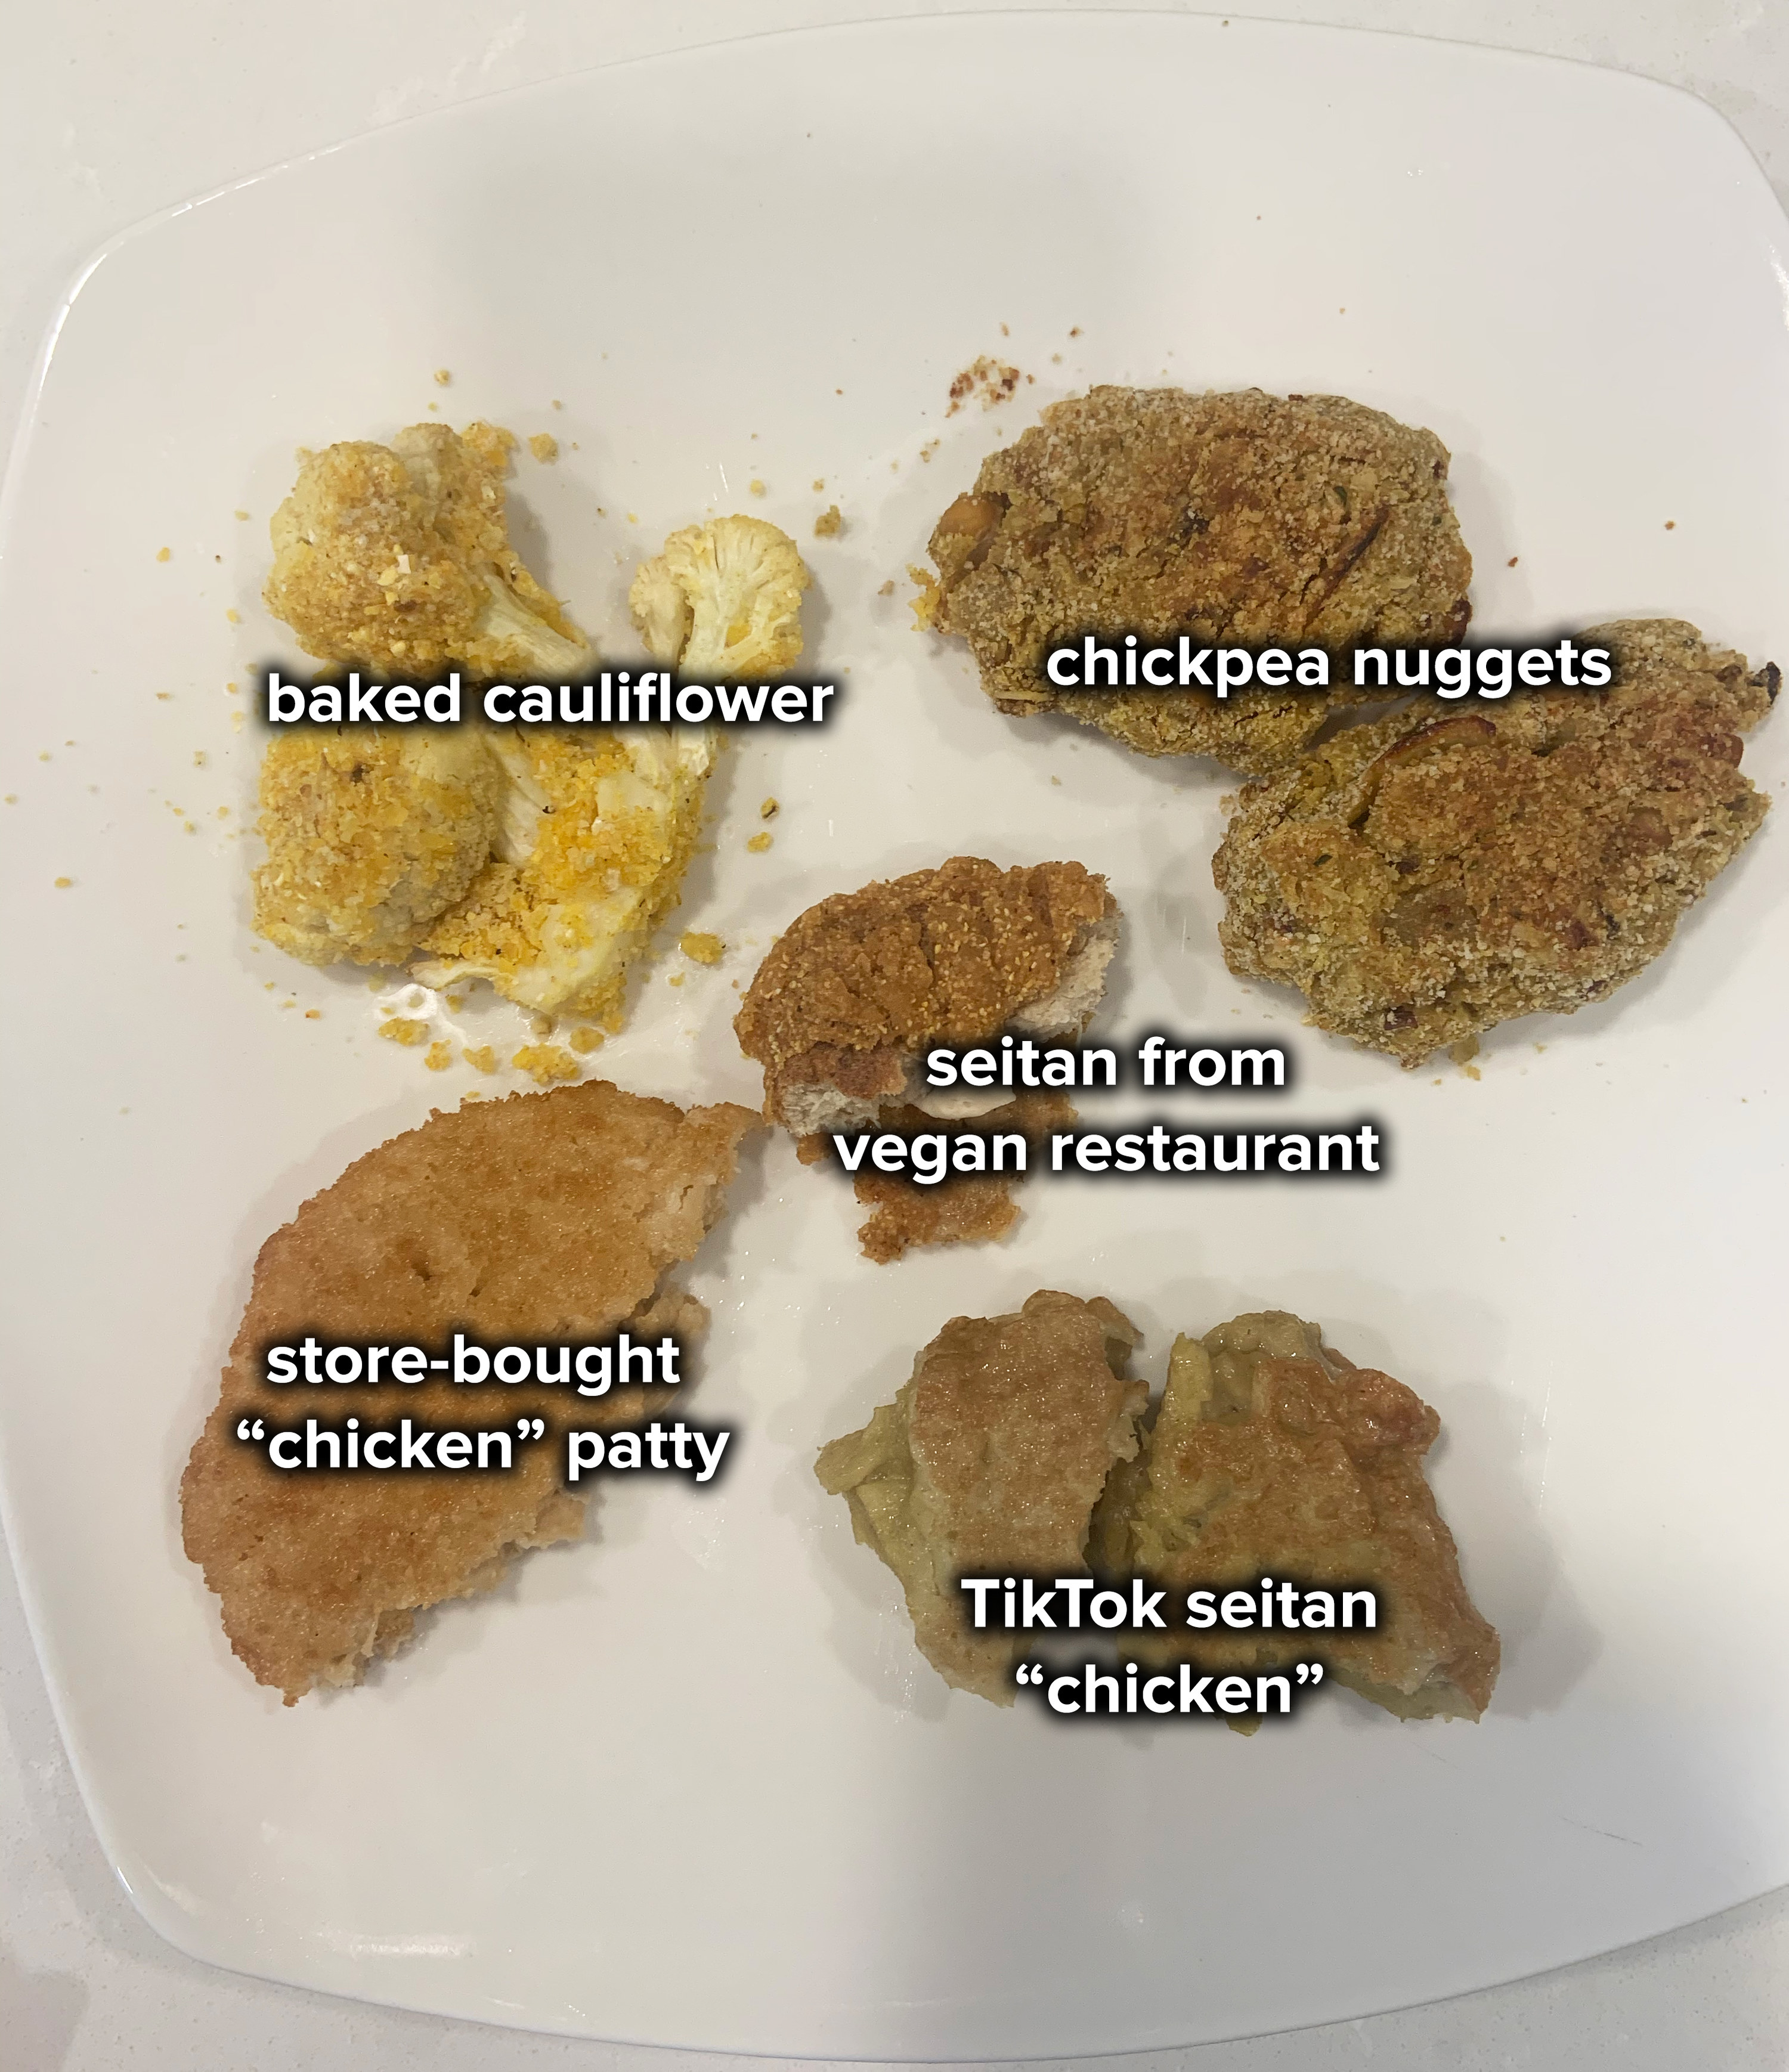 baked cauliflower, chickpea nuggets, seitan from a vegan restaurant, store-bought &quot;chicken&quot; patties, and TikTok seitan &quot;chicken&quot;